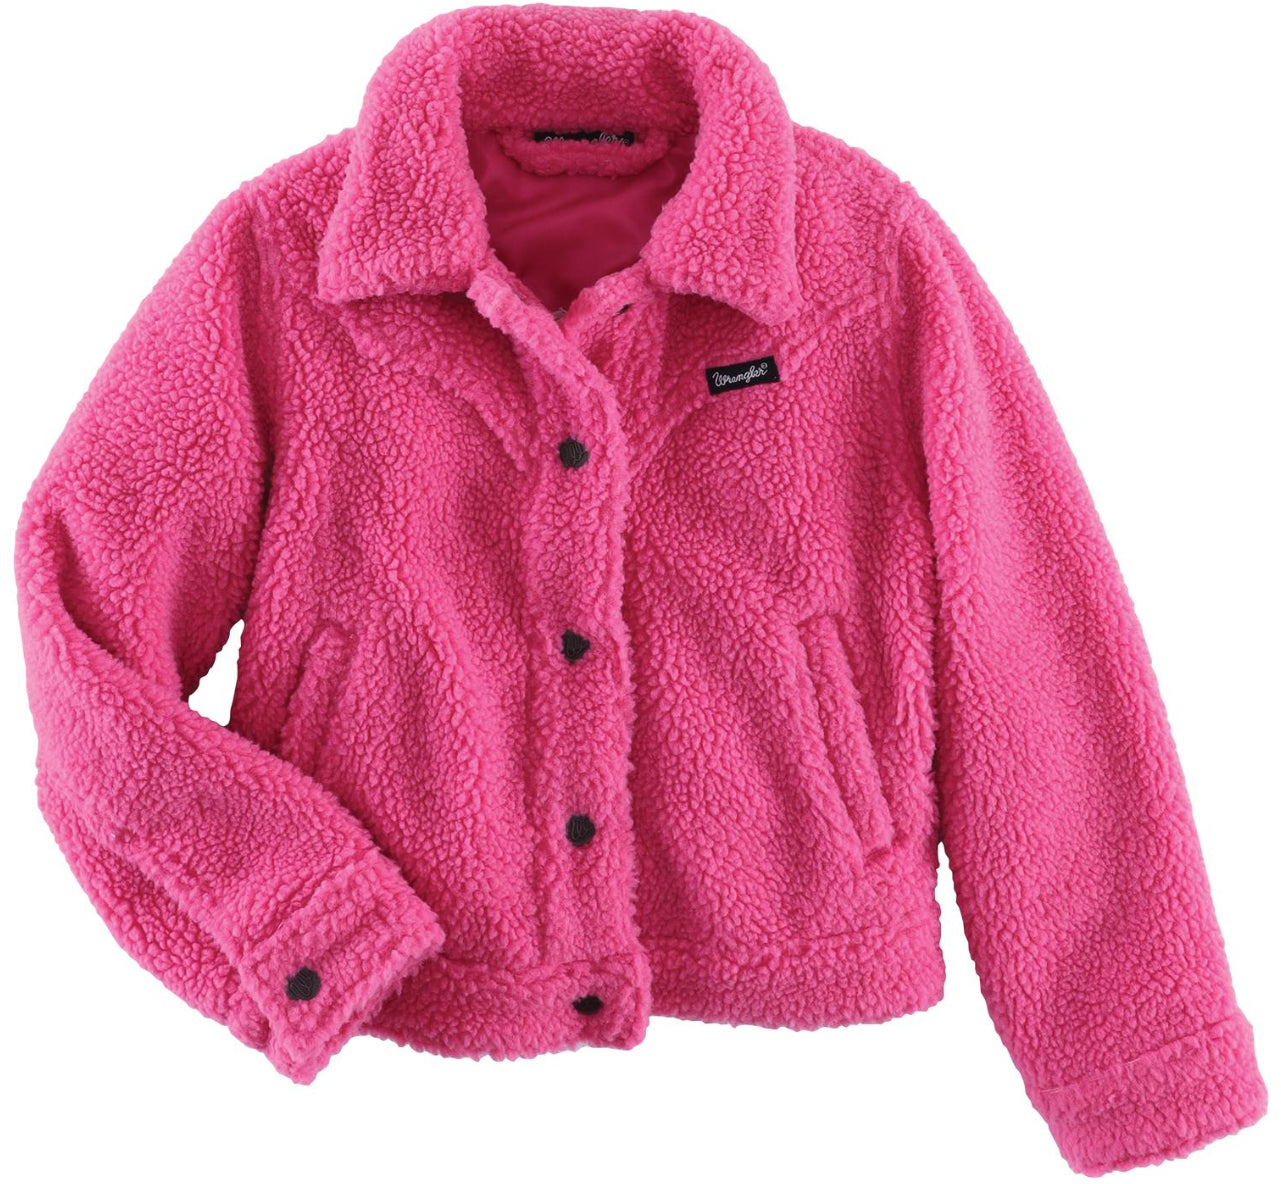 Girls Western Jackets - Pink